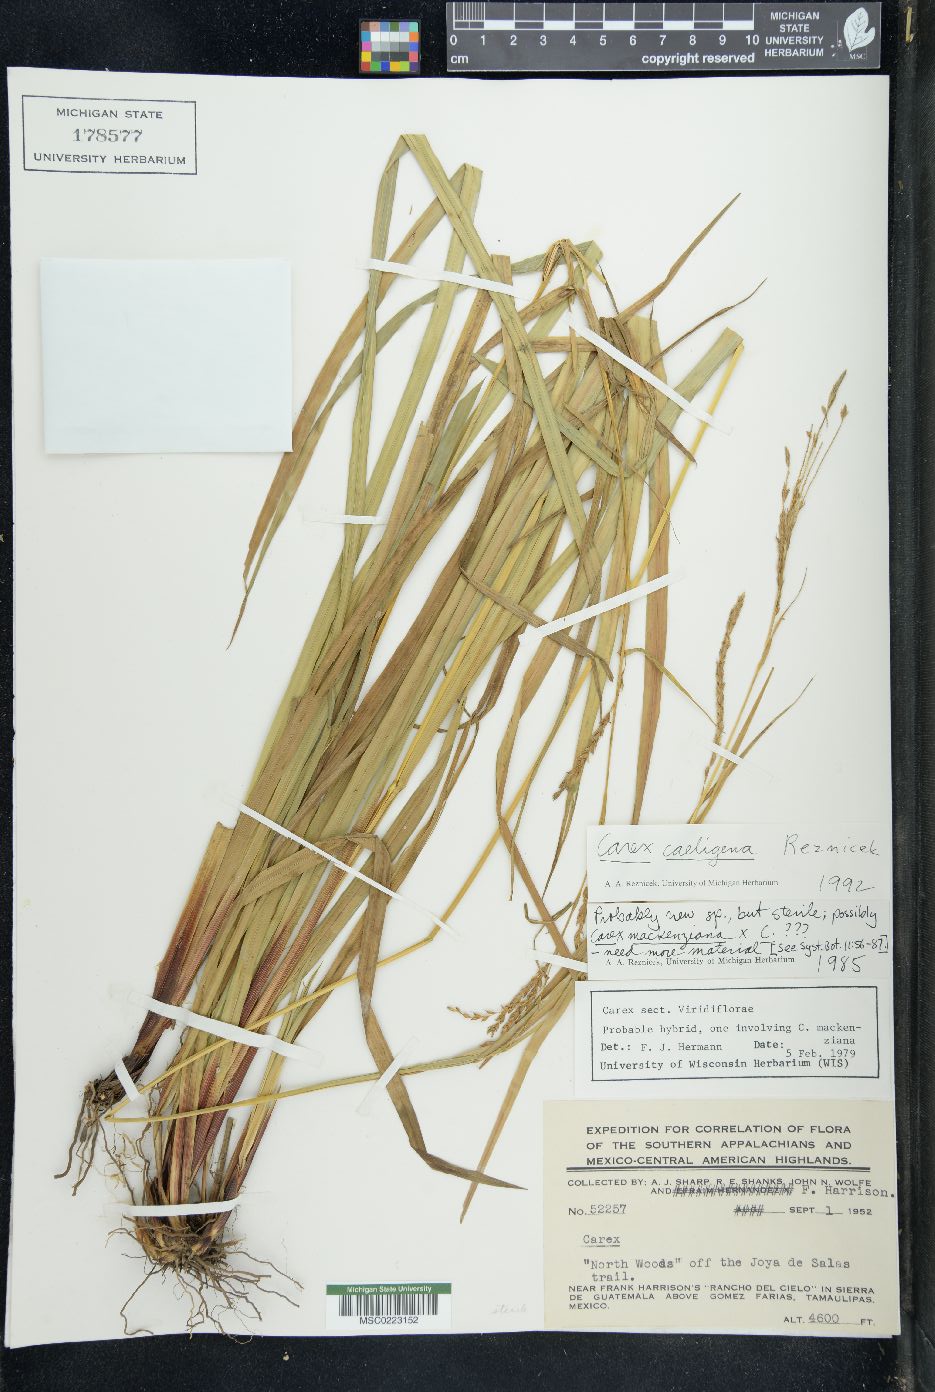 Carex caeligena image